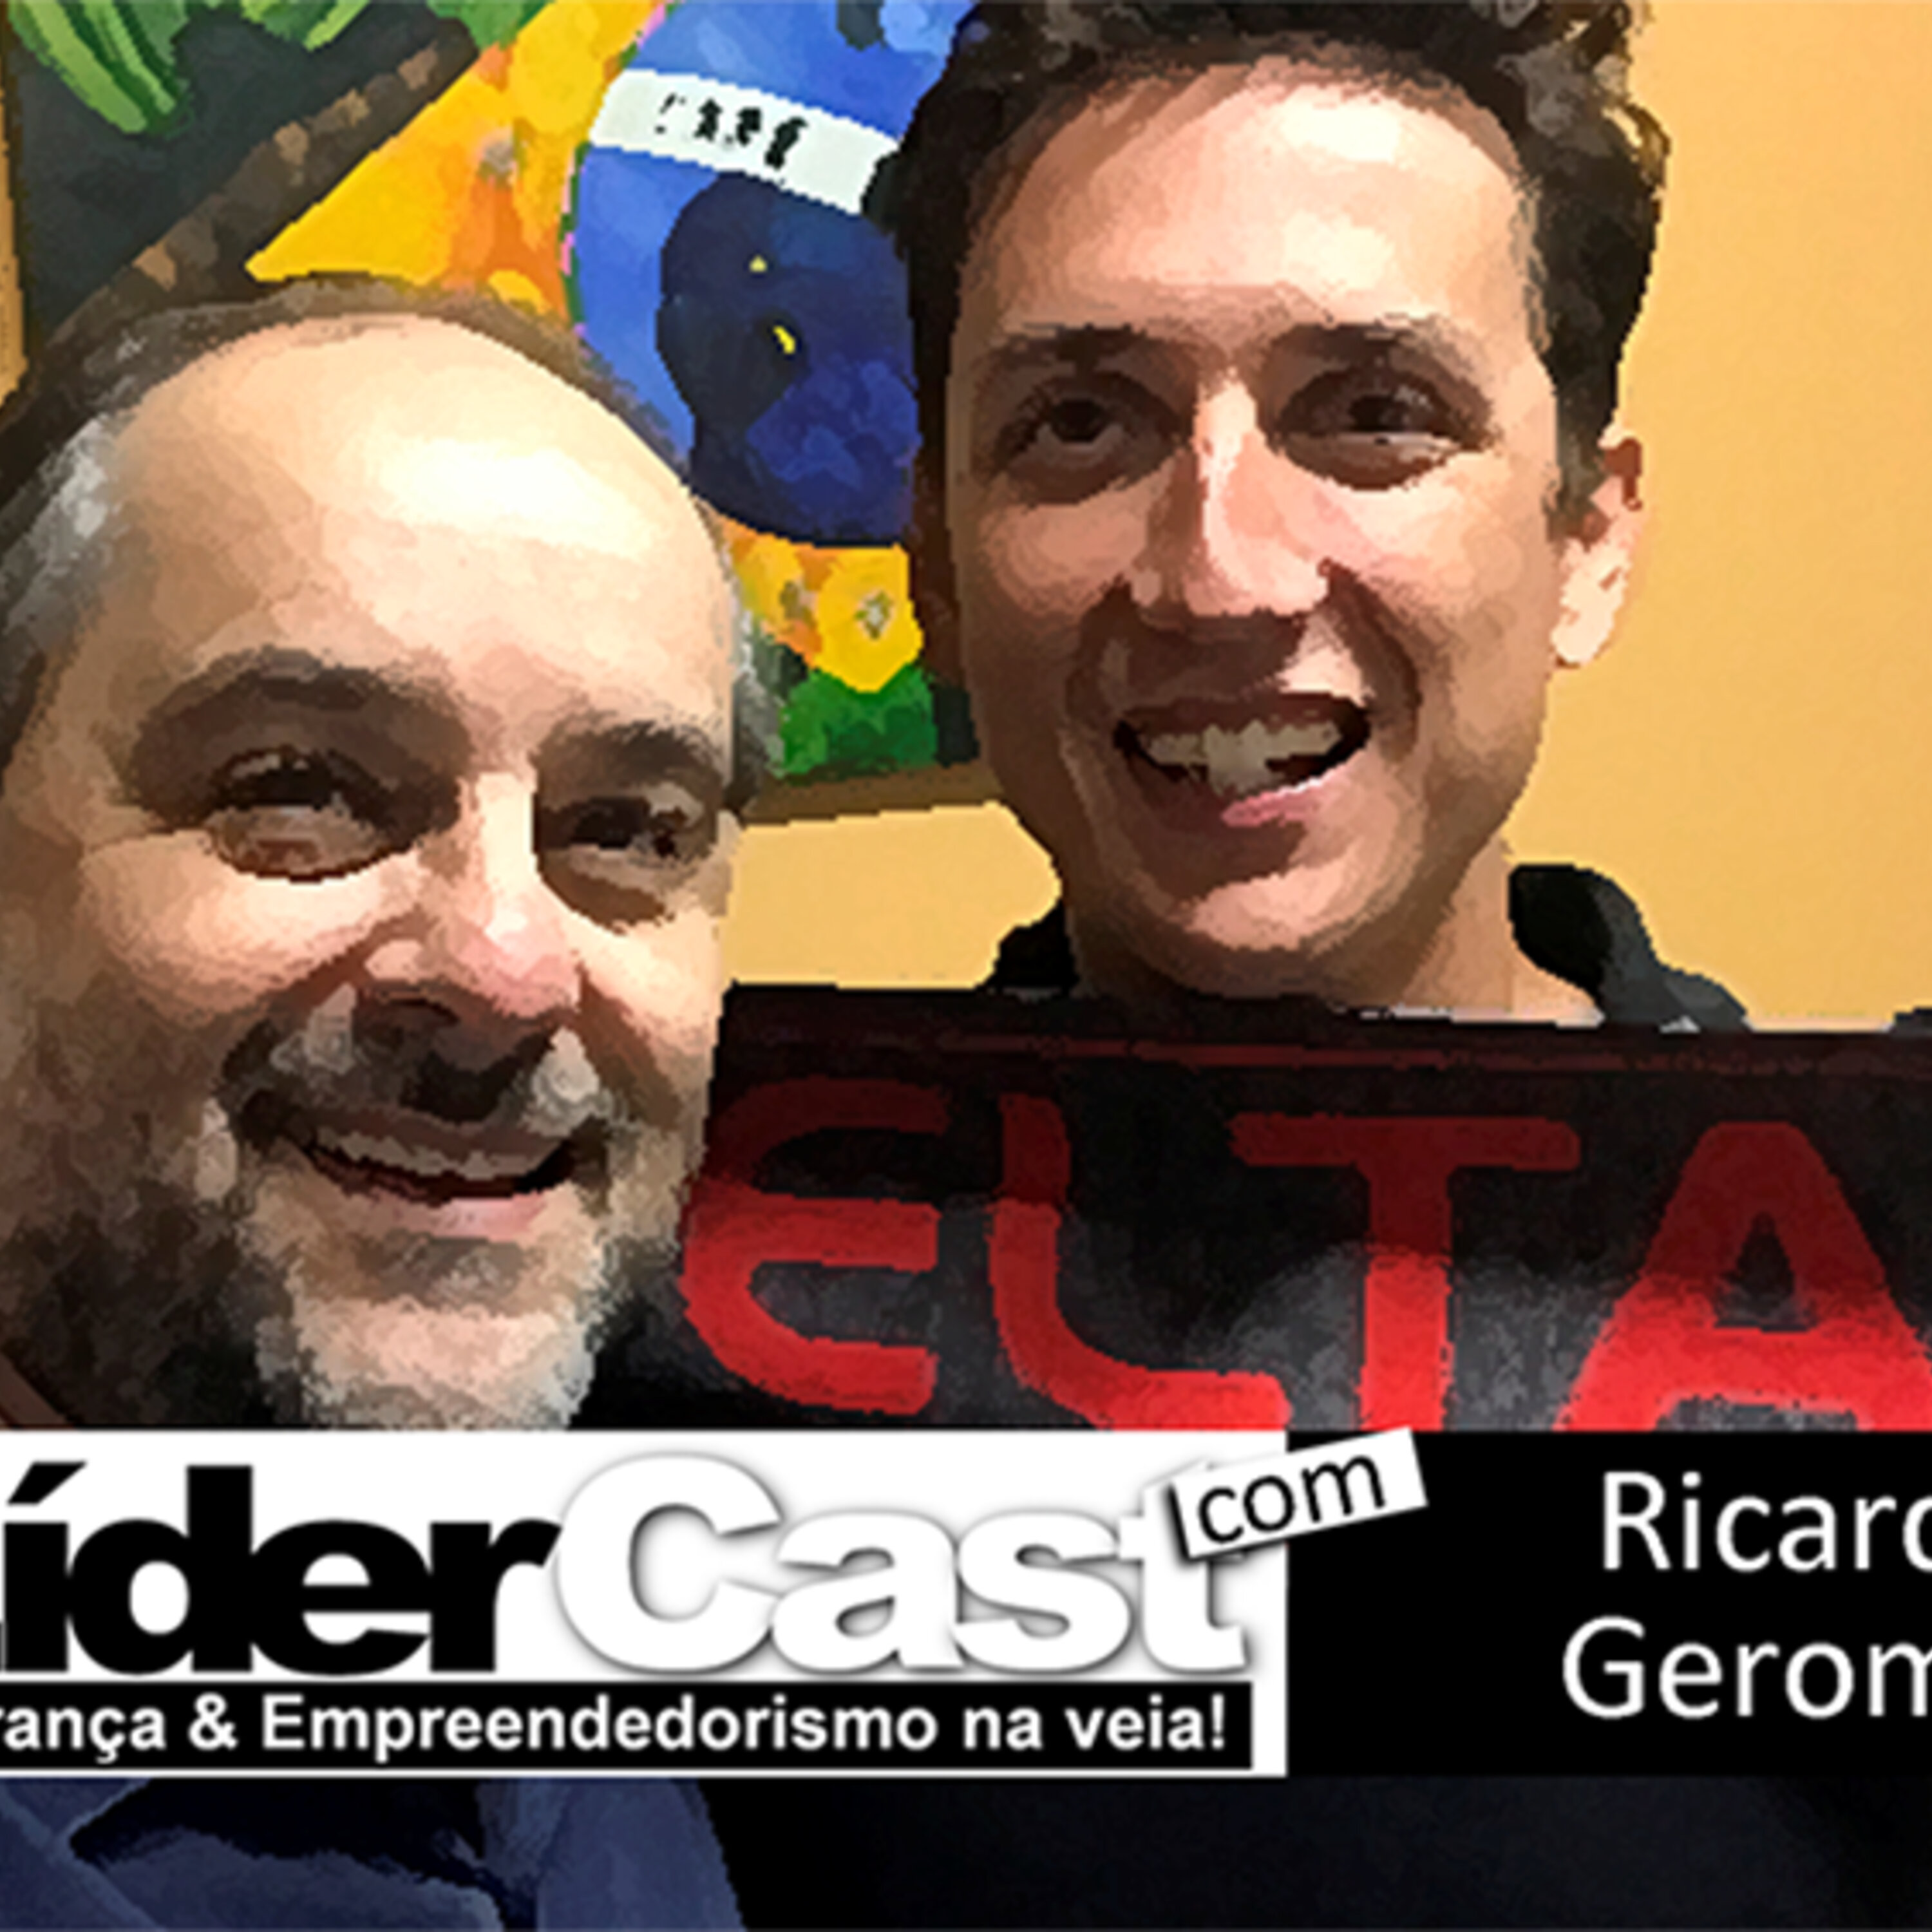 LíderCast 96 – Ricardo Geromel